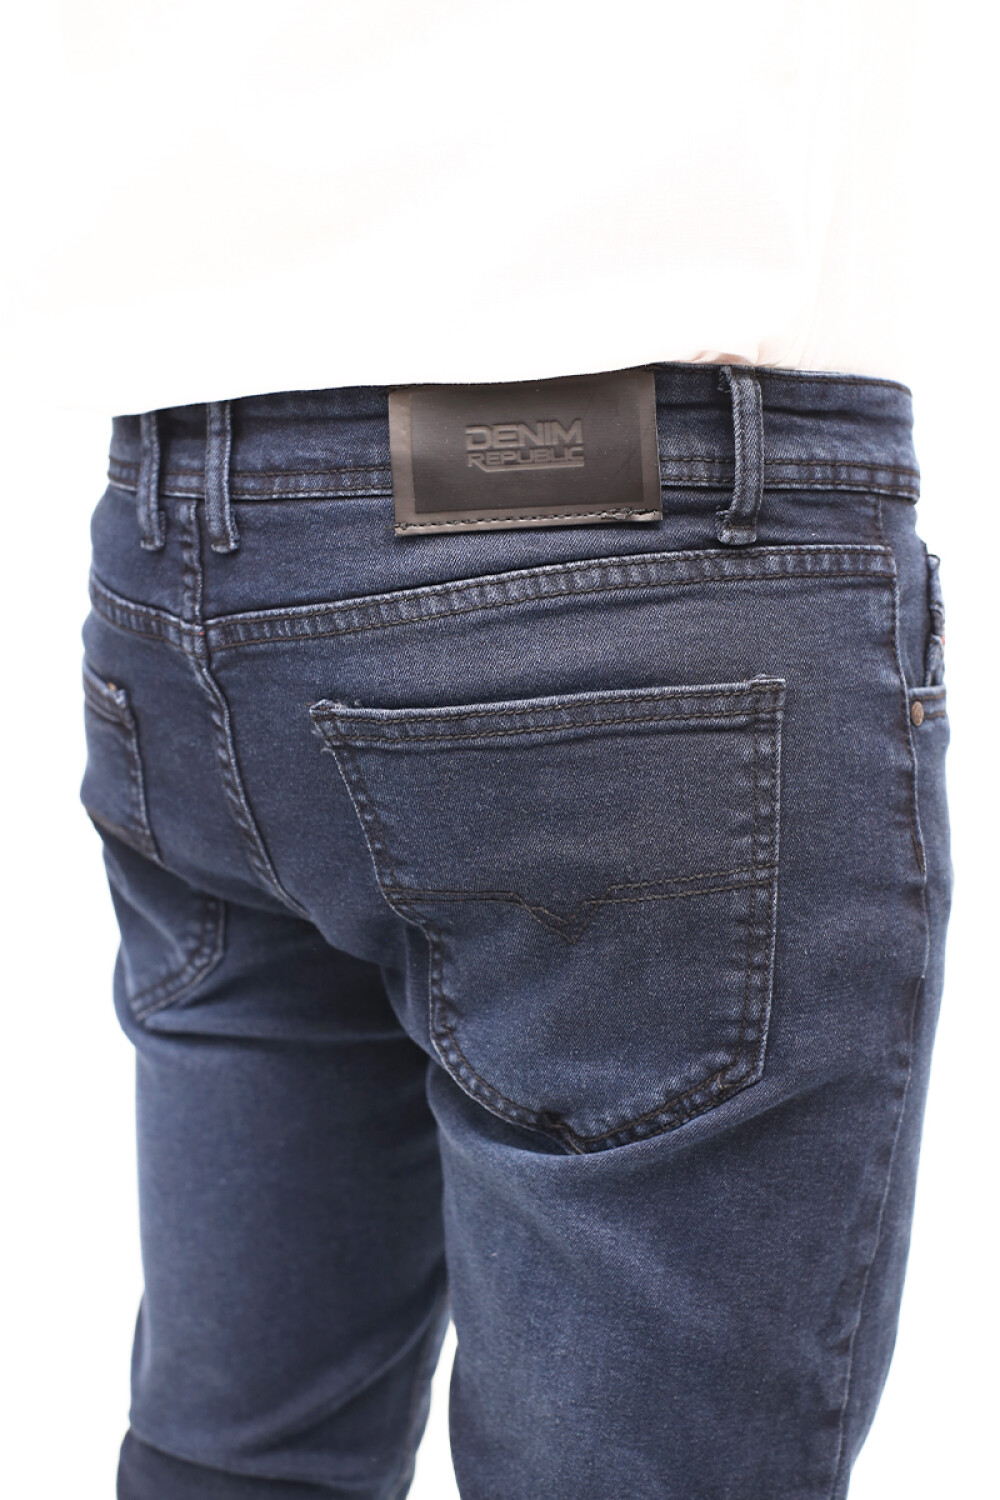 Denim Republic | Jeans | Vintage Super High Waist Denim Republic Jeans |  Poshmark